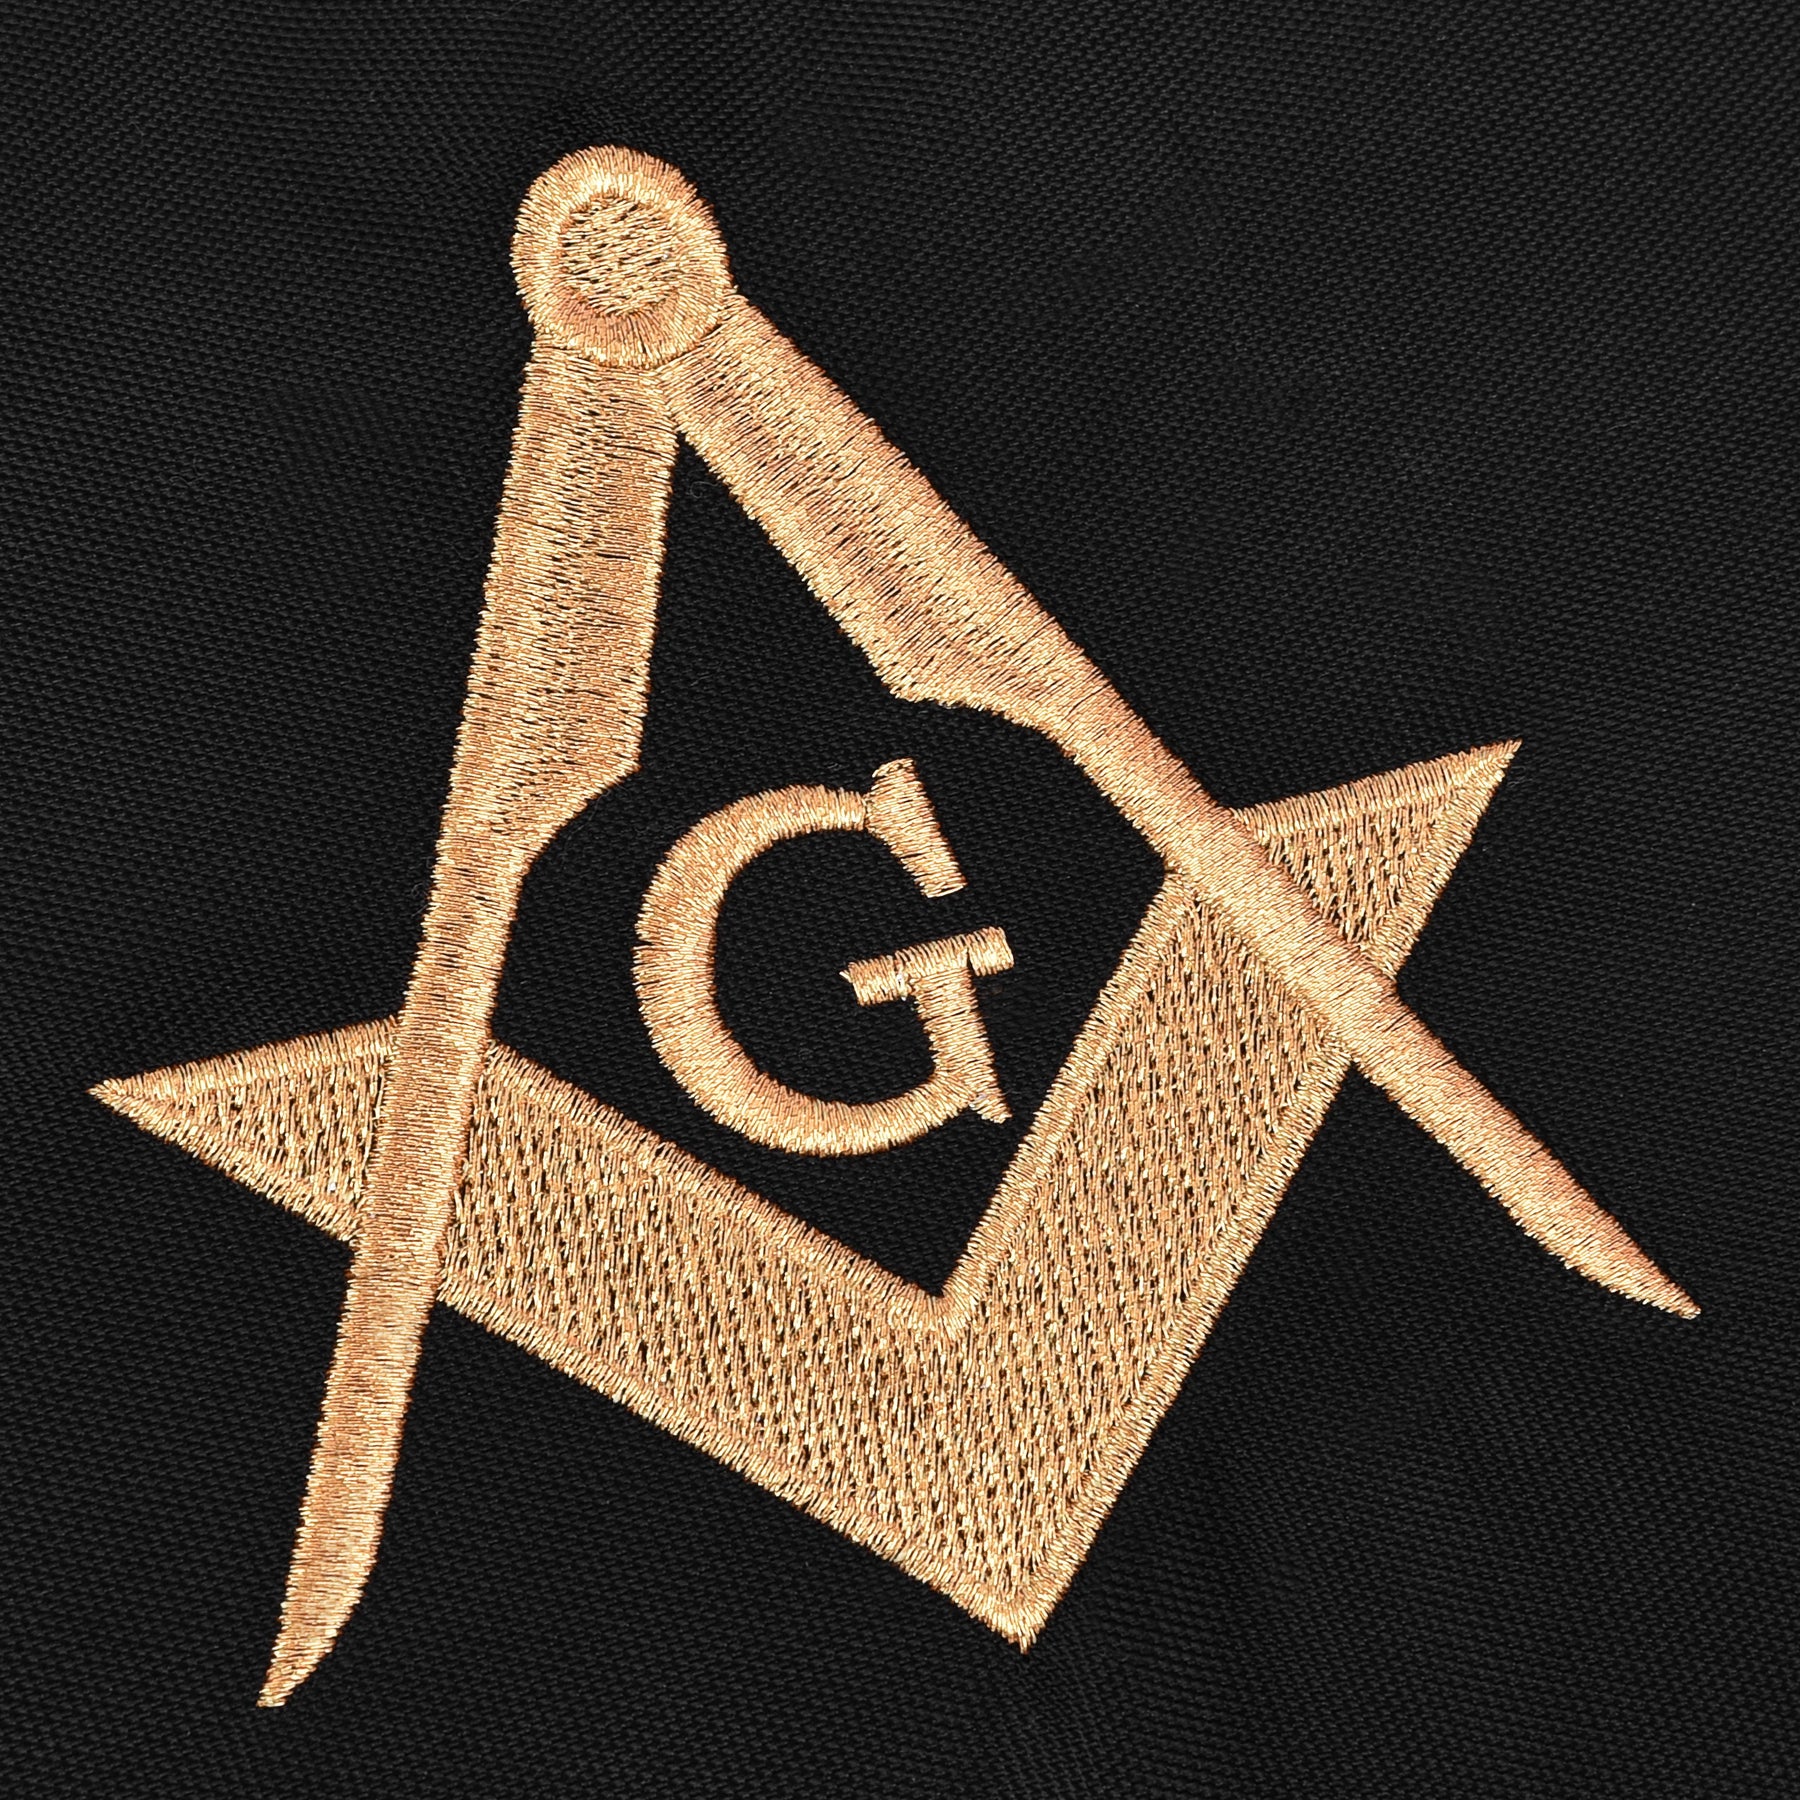 Master Mason Blue Lodge Apron Case - Black Cordura Fabric With Gold Emblem - Bricks Masons